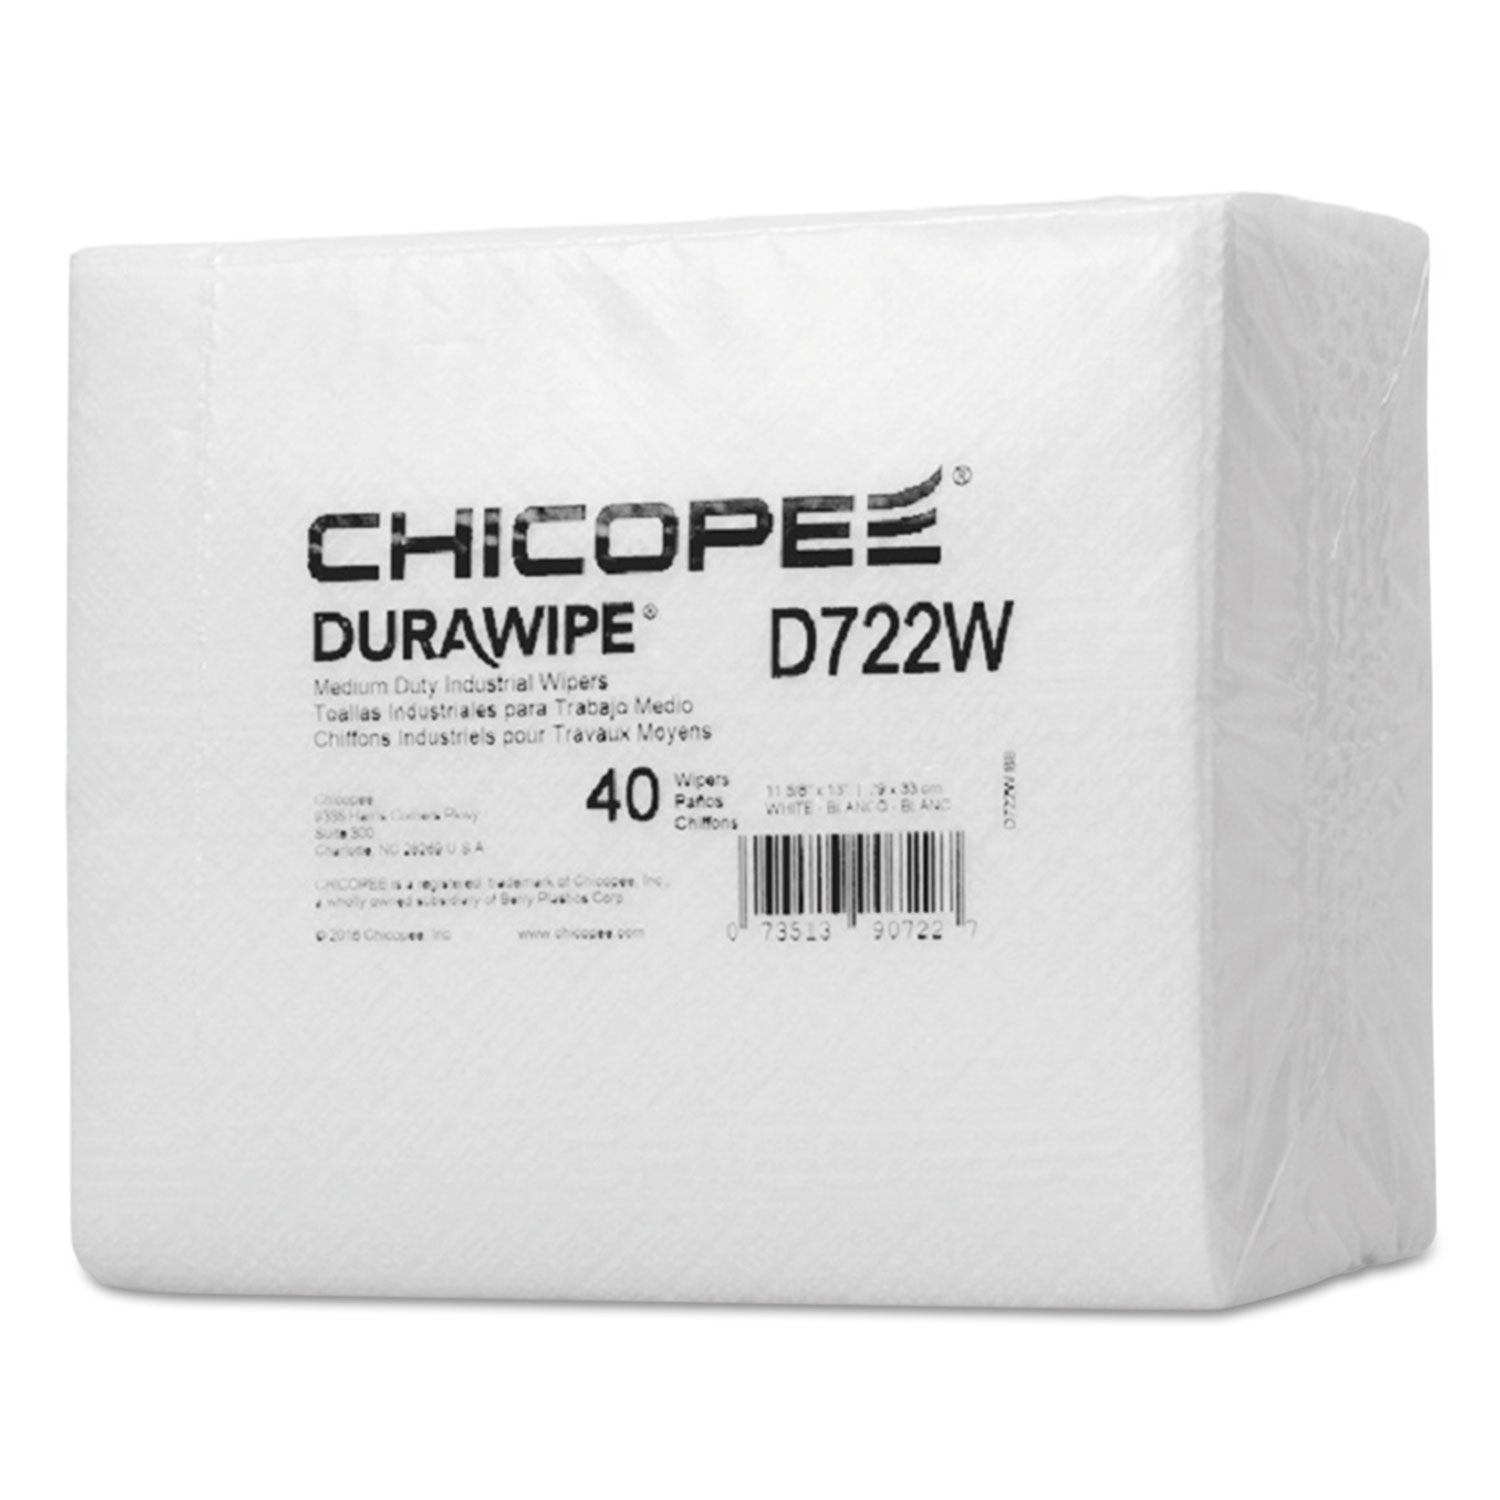 durawipe-medium-duty-industrial-wipers-146-x-137-white-40-pack-24-packs-carton_chid722w - 1